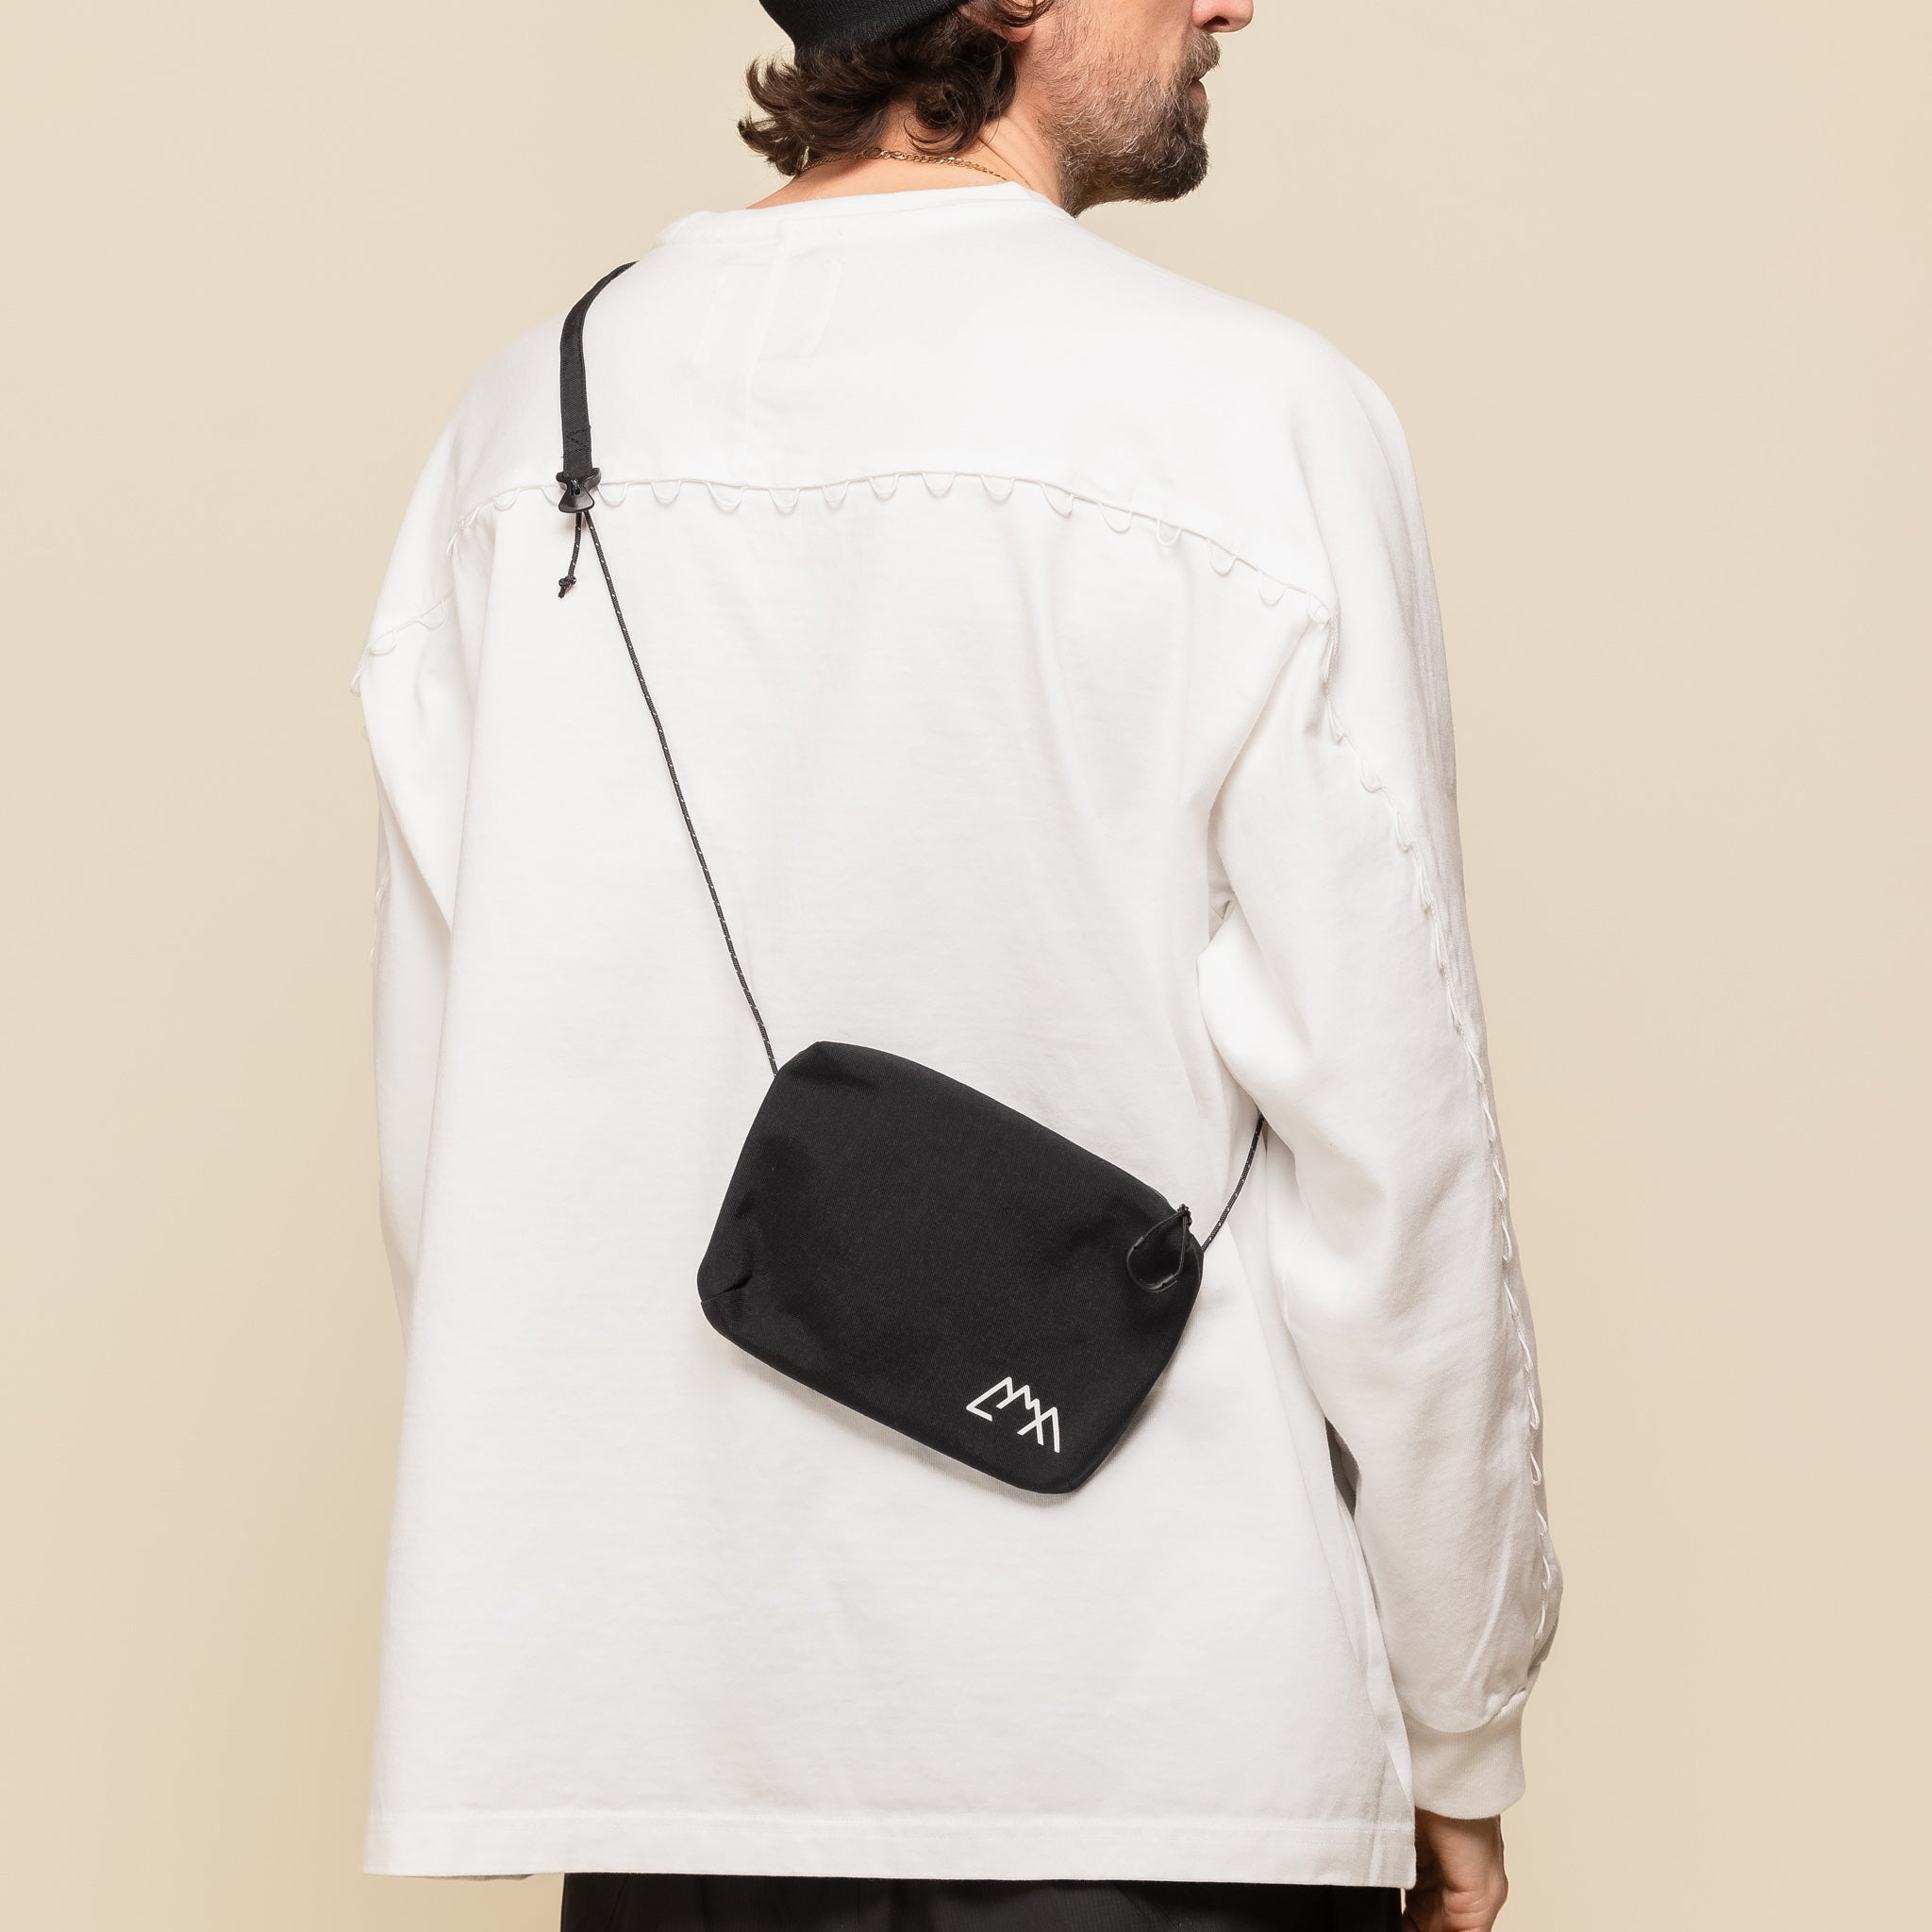 CMF Comfy Outdoor Garment - Smart Pak Bag Smooth Nylon - Black